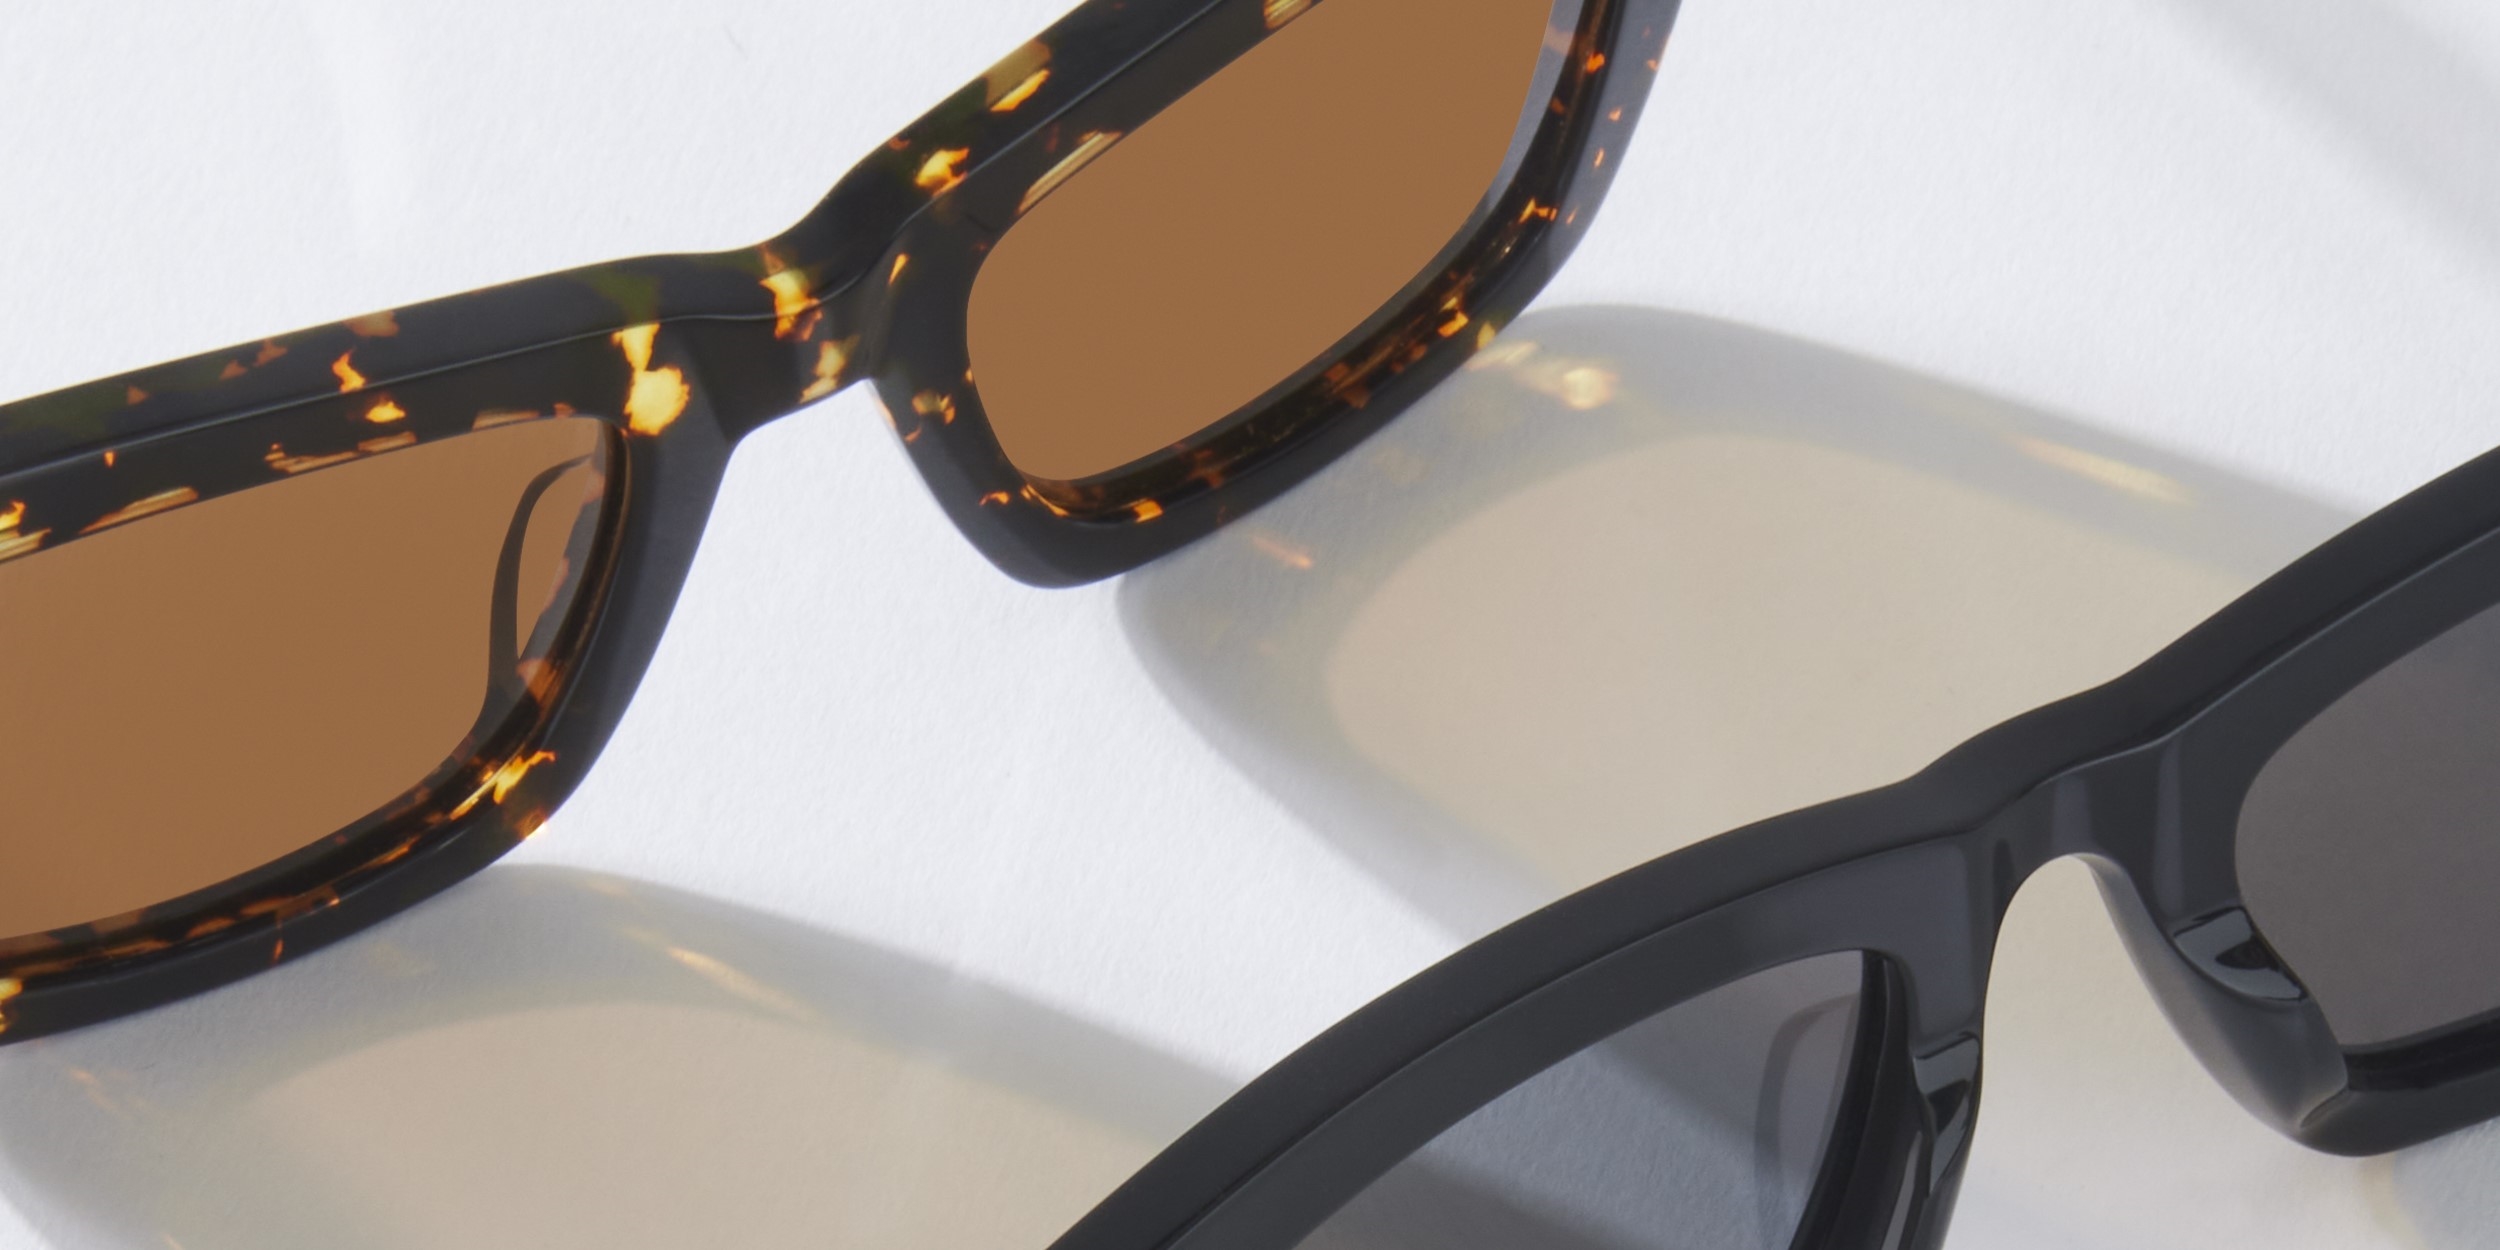 Photo Details of Manu Sun Fire Tortoise Sun Glasses in a room